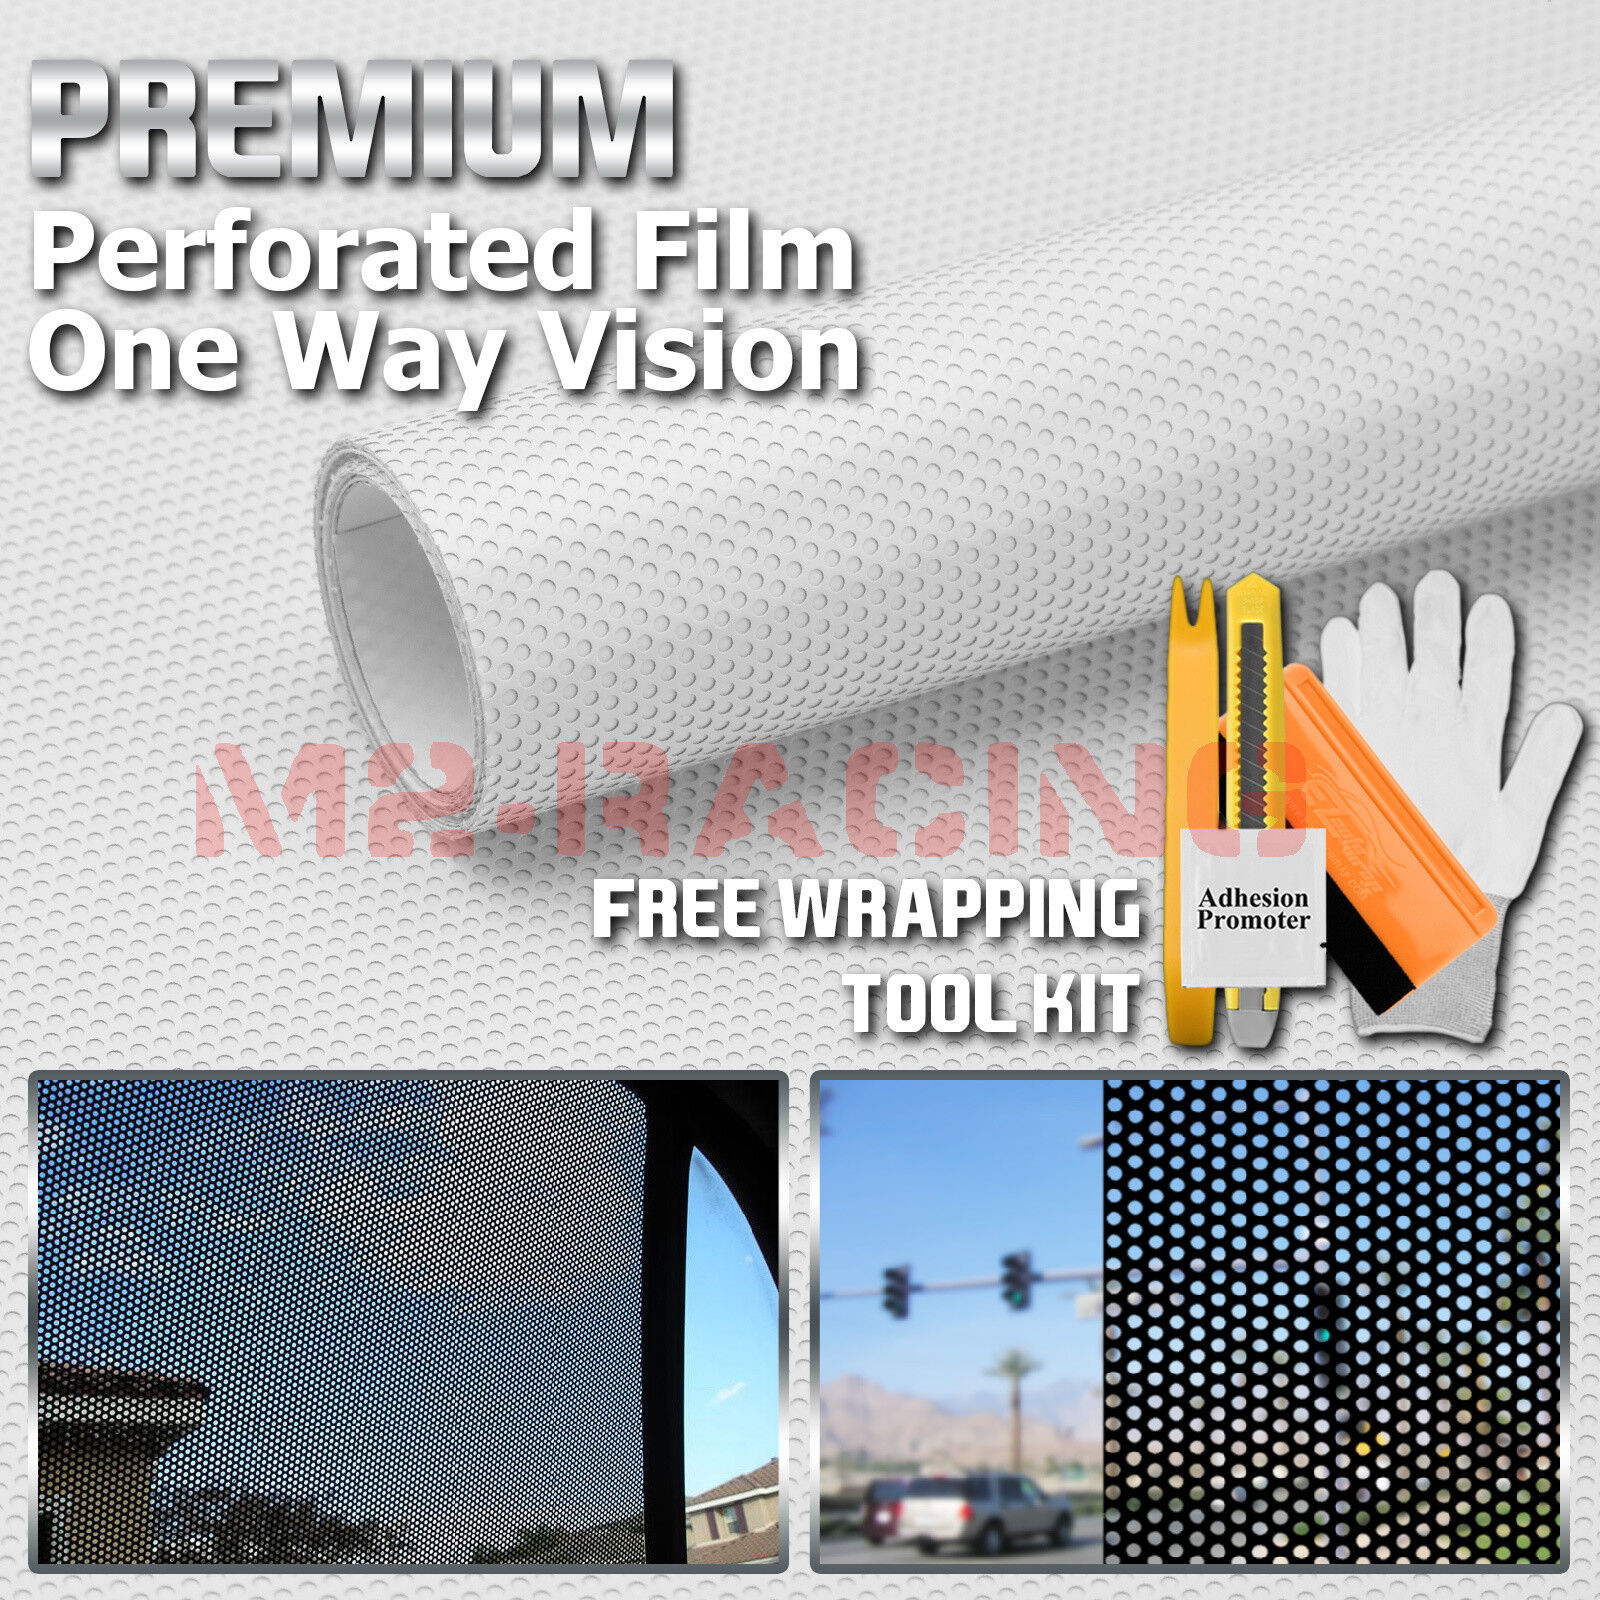 【One Way Vision】 White Perforated Print Media Vinyl Window Sticker Sheet Film